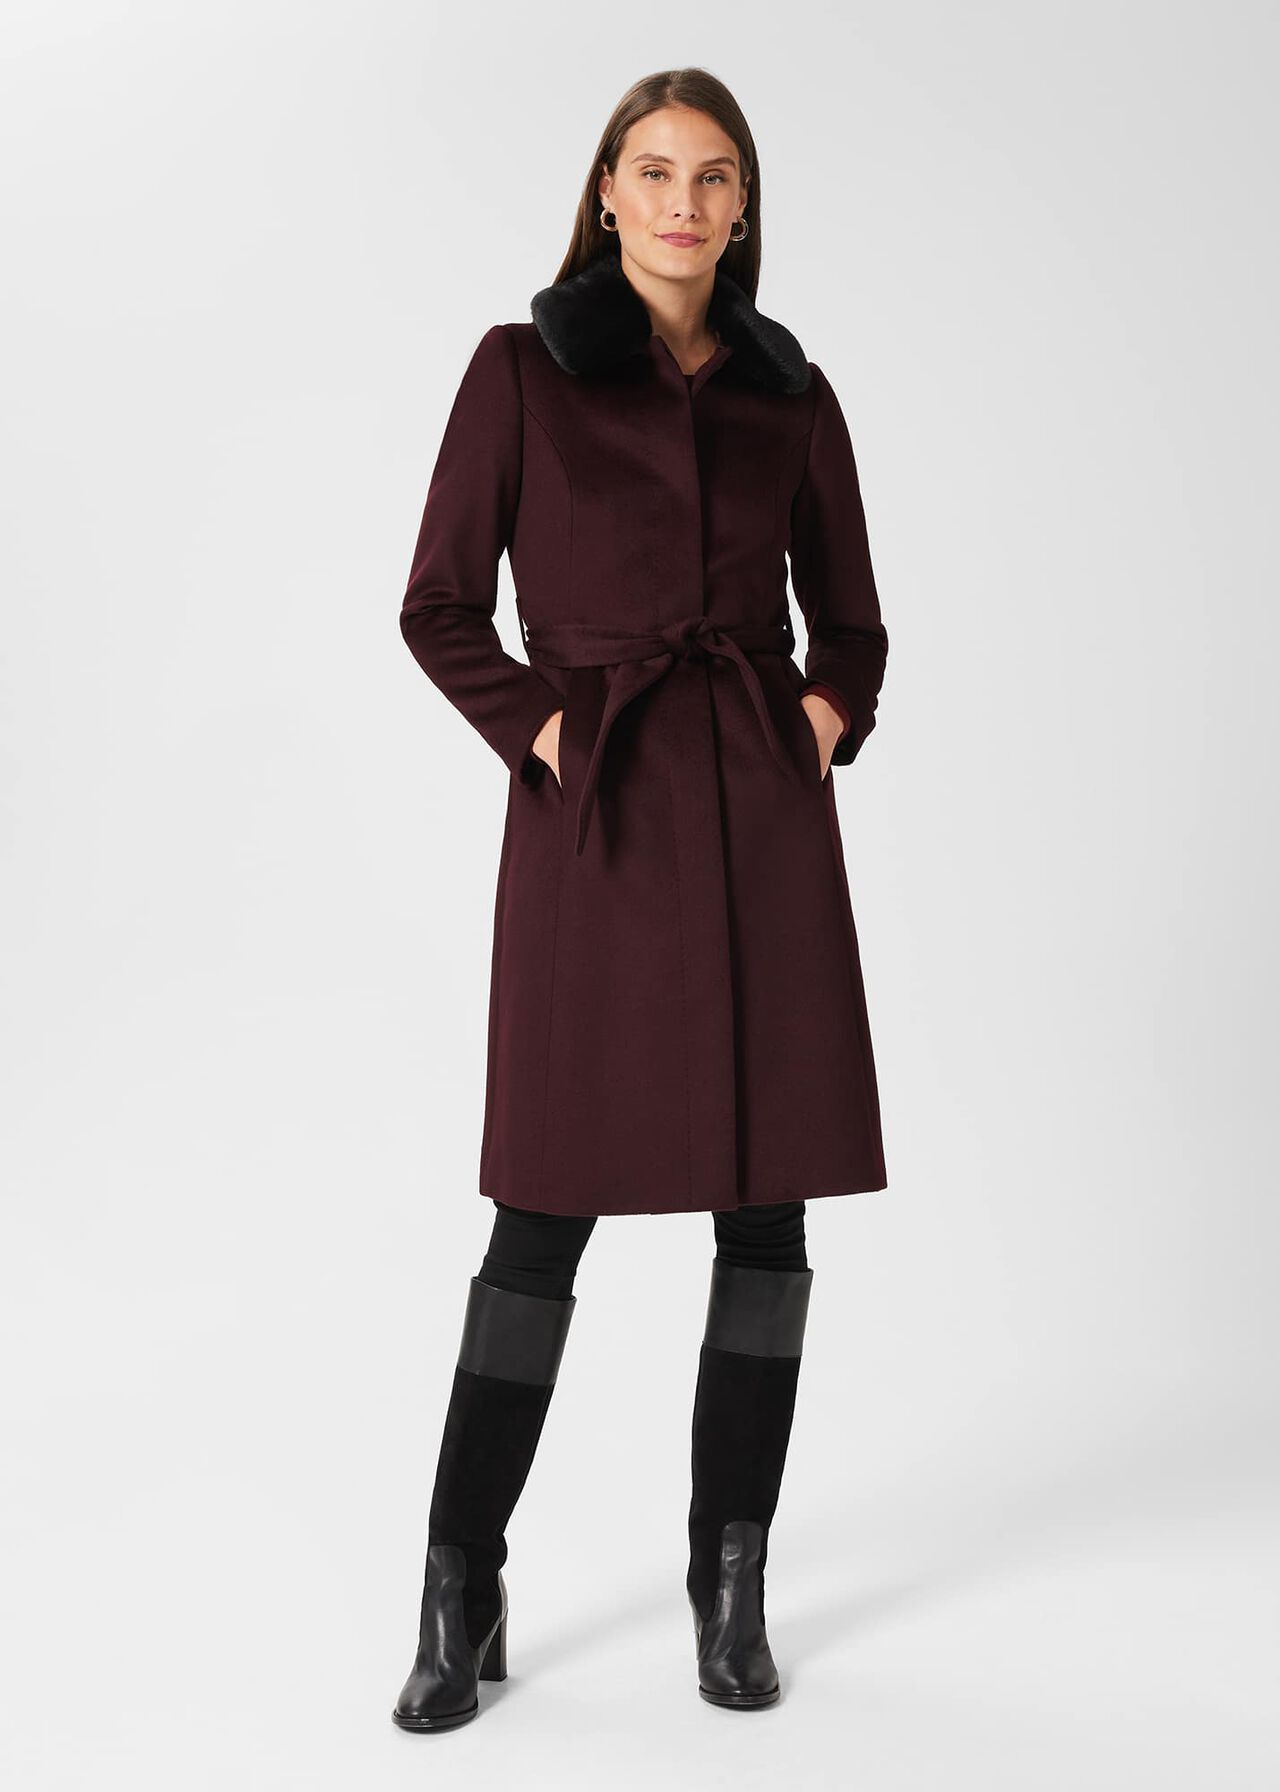 Edeline Wool Coat With Faux Fur Collar, Wine, hi-res